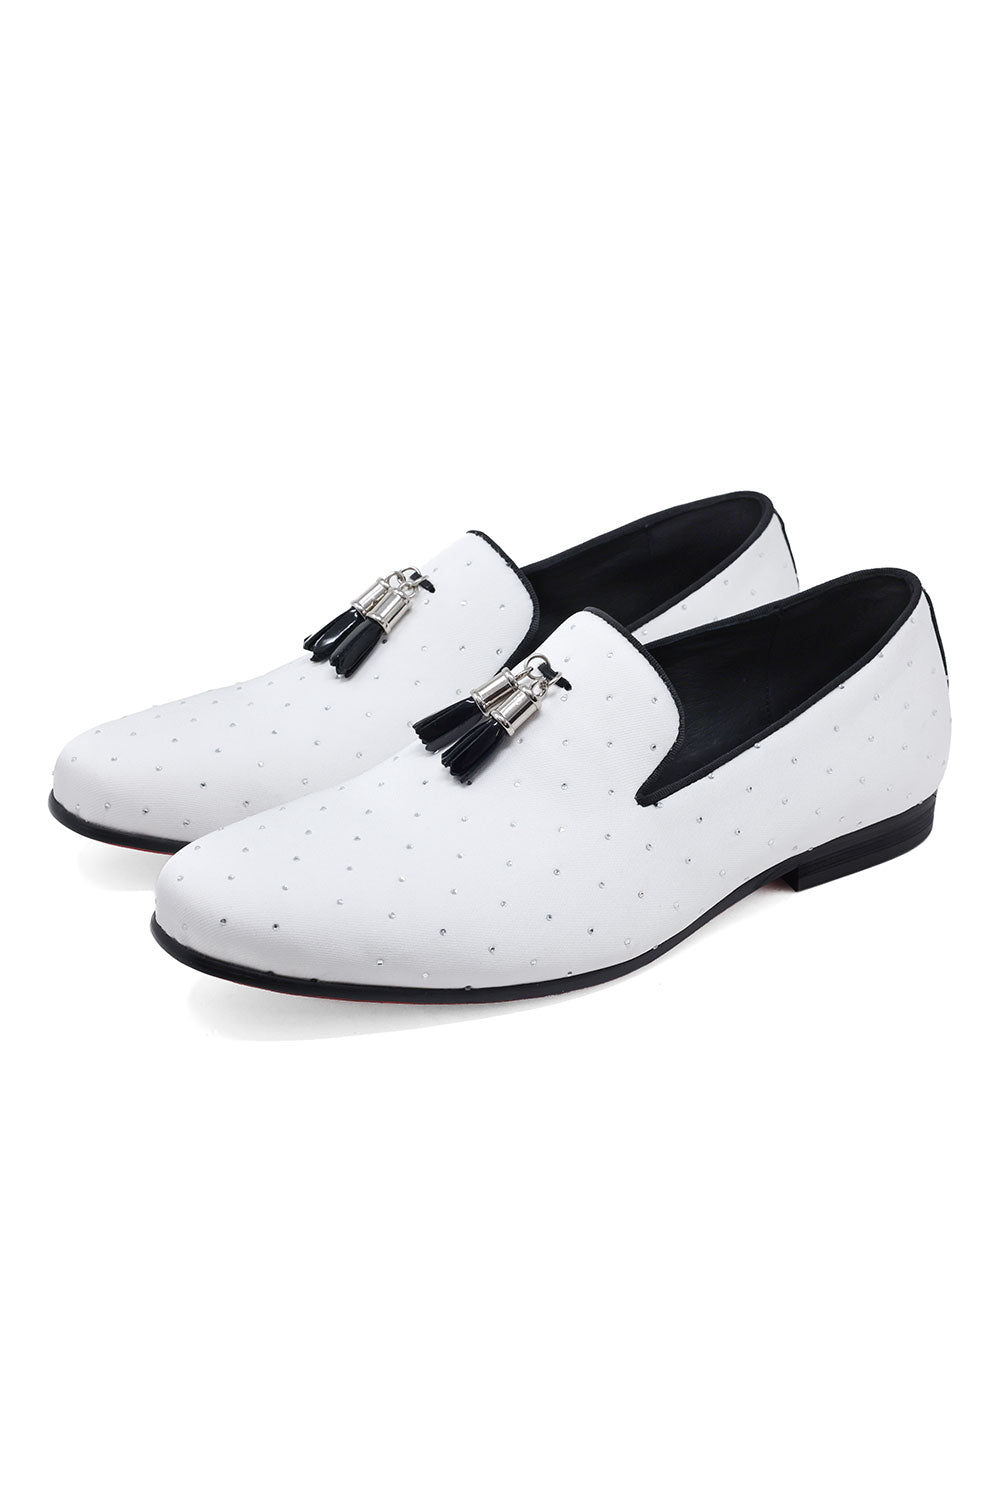 BARABAS Men's Solid Pattern Design Luxury Tassel Loafer Shoes SH3087 White Silver